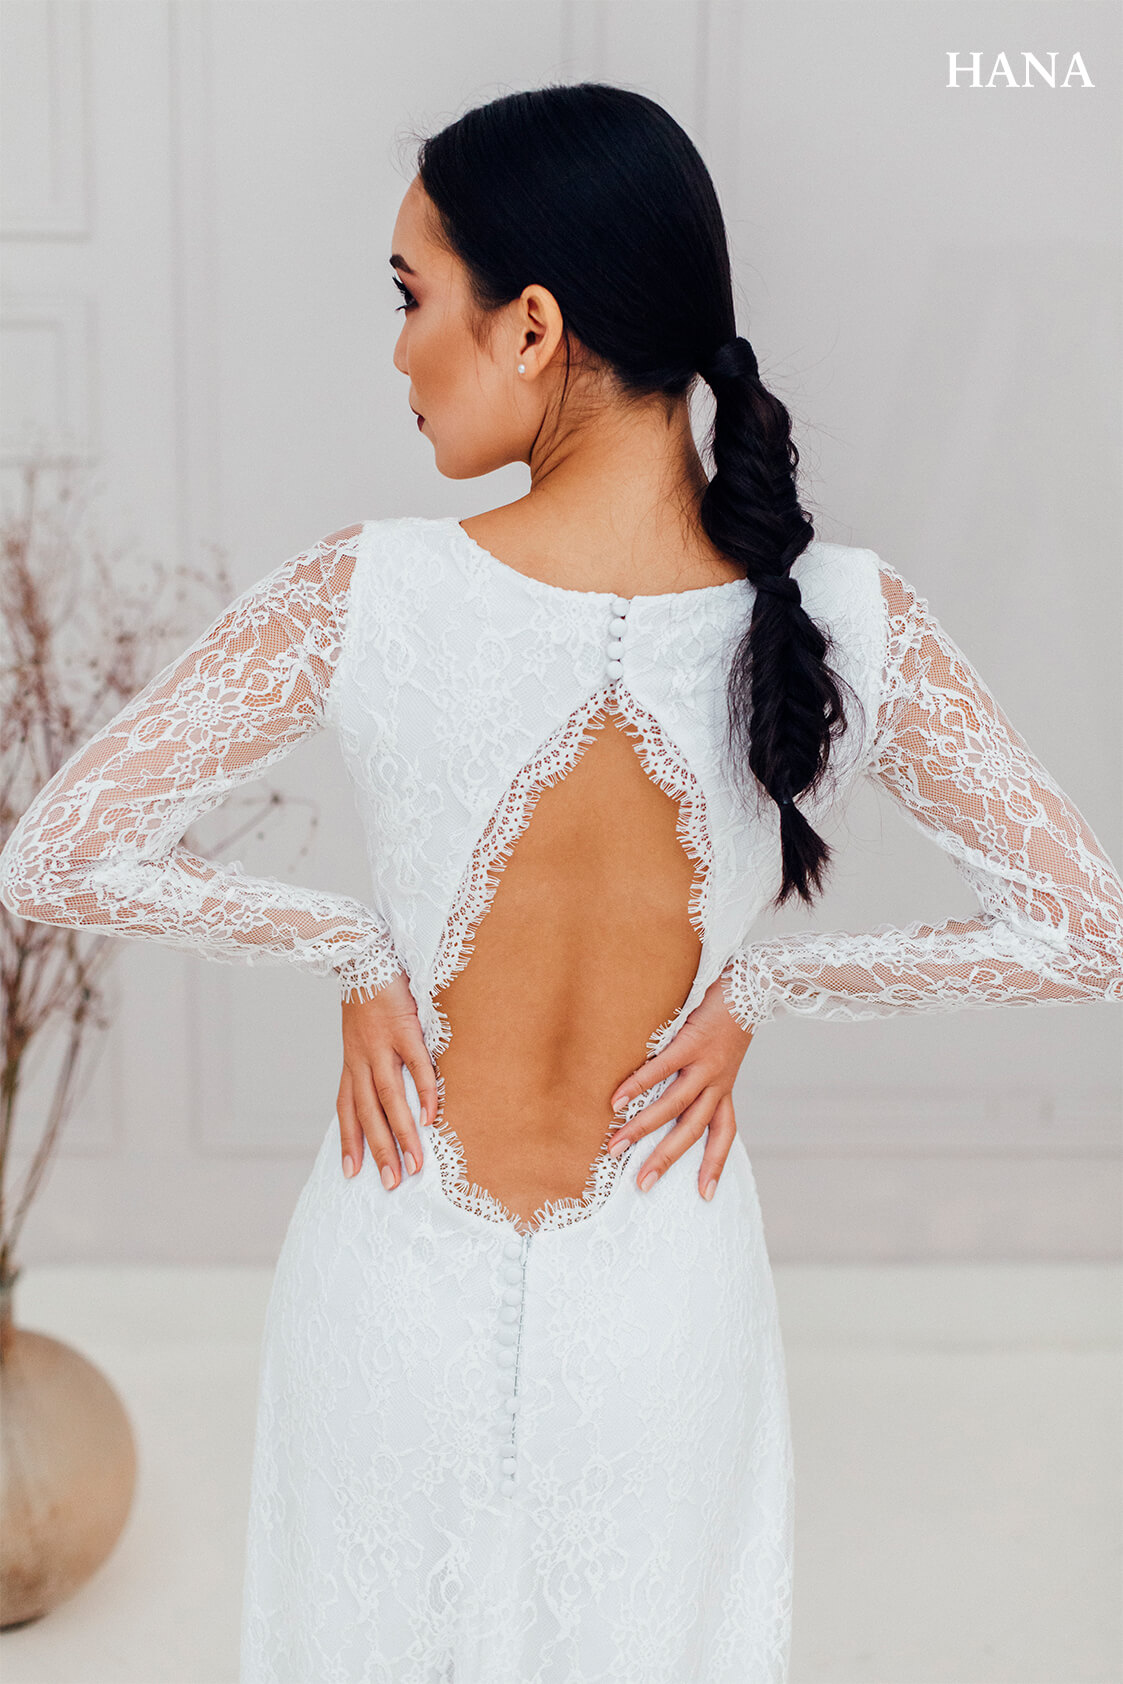 HANA - wedding dress "Refined Elegance" collection